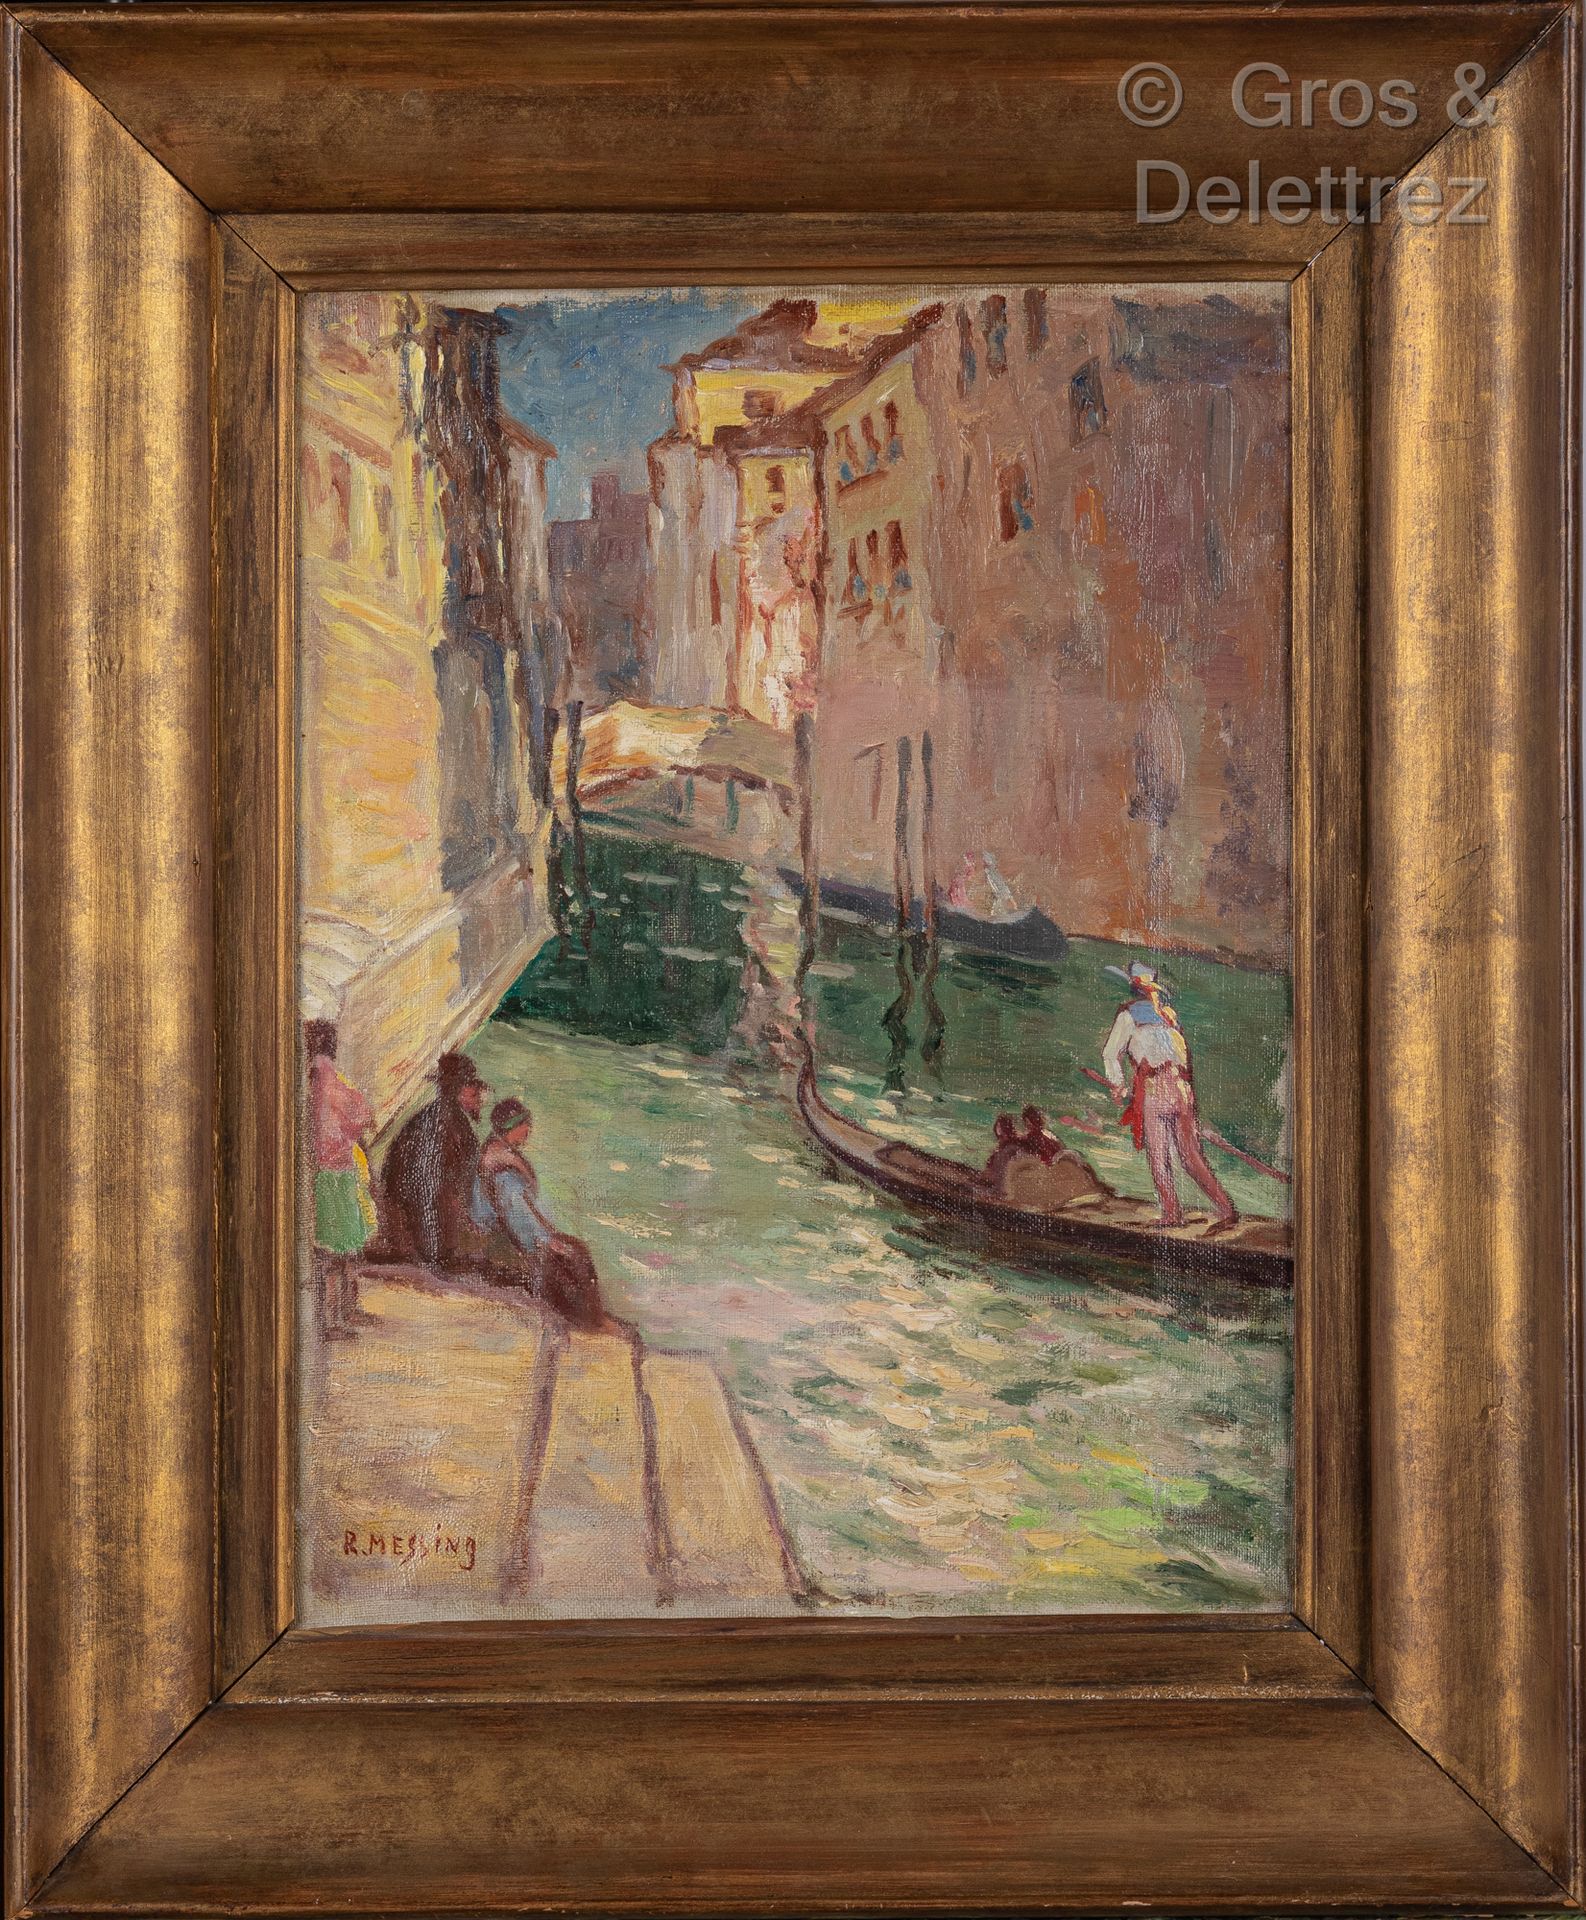 Null R.梅辛（20岁）

威尼斯的贡多拉

布面油画，左下角有签名

41 x 31厘米。修缮